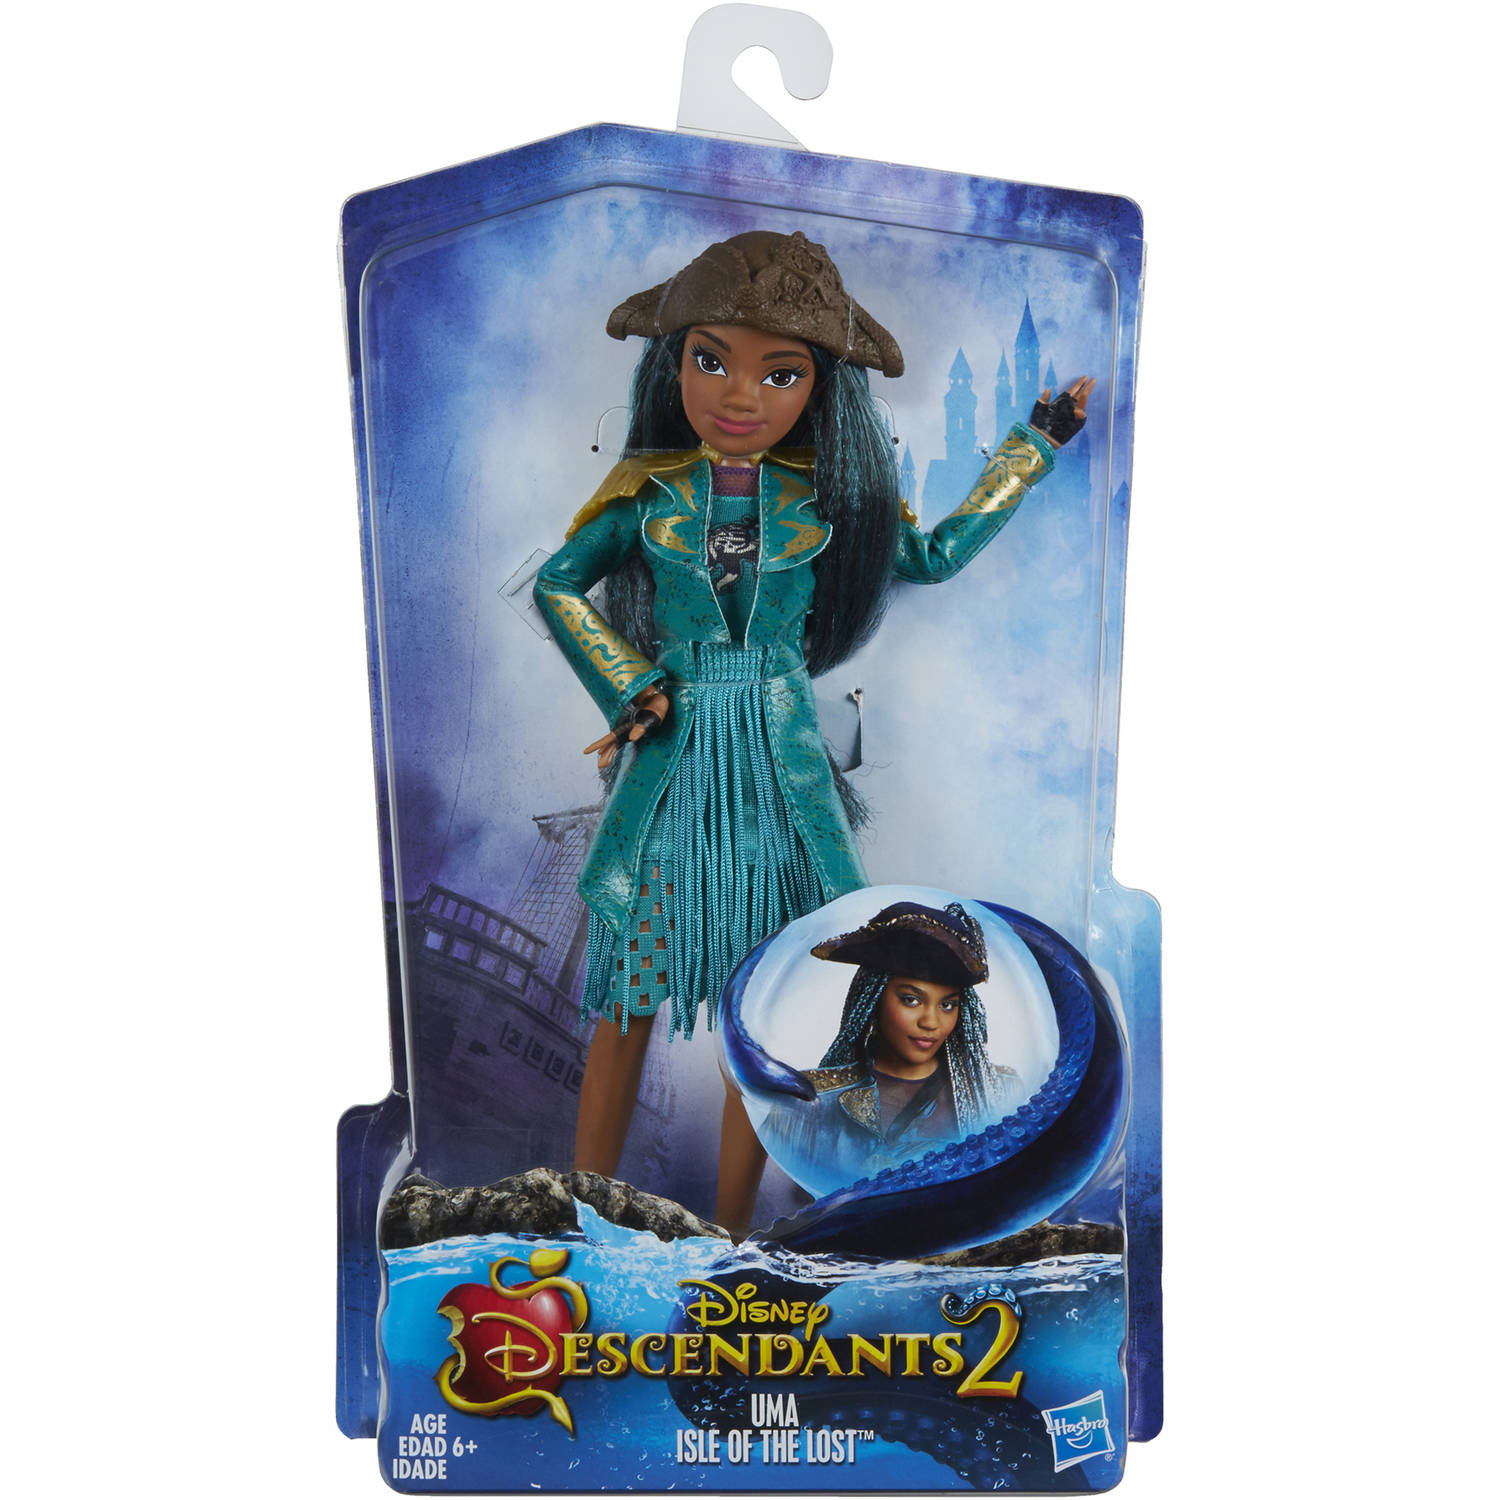 Disney Descendants Uma Isle of the Lost Fashion Doll - Walmart.com